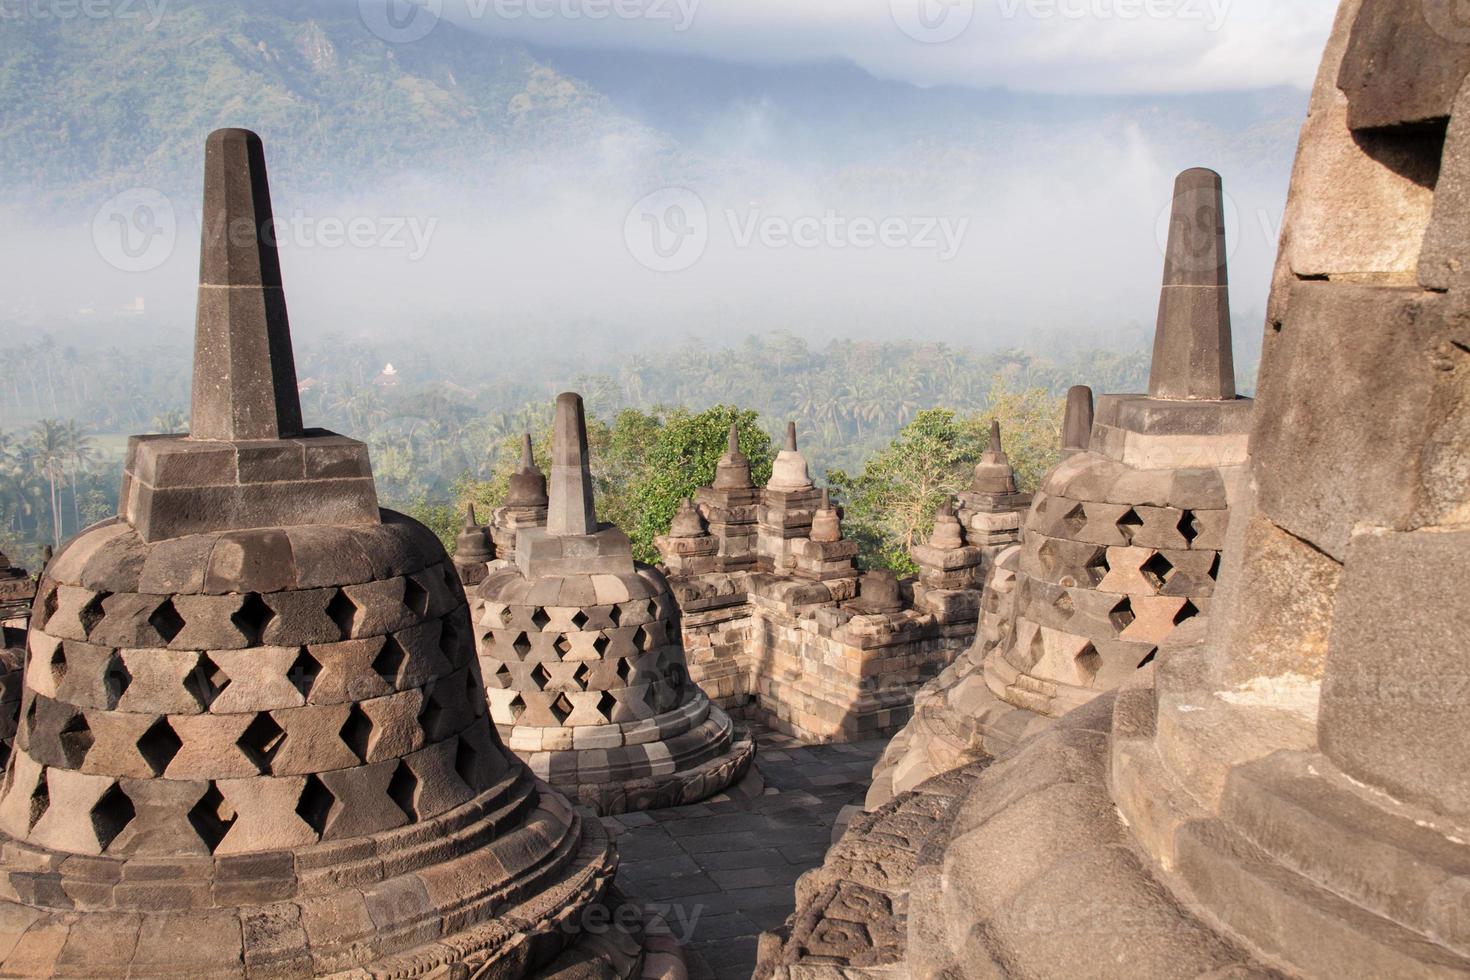 Borobudur tempel in de buurt van Yogyakarta op Java-eiland, Indonesië foto